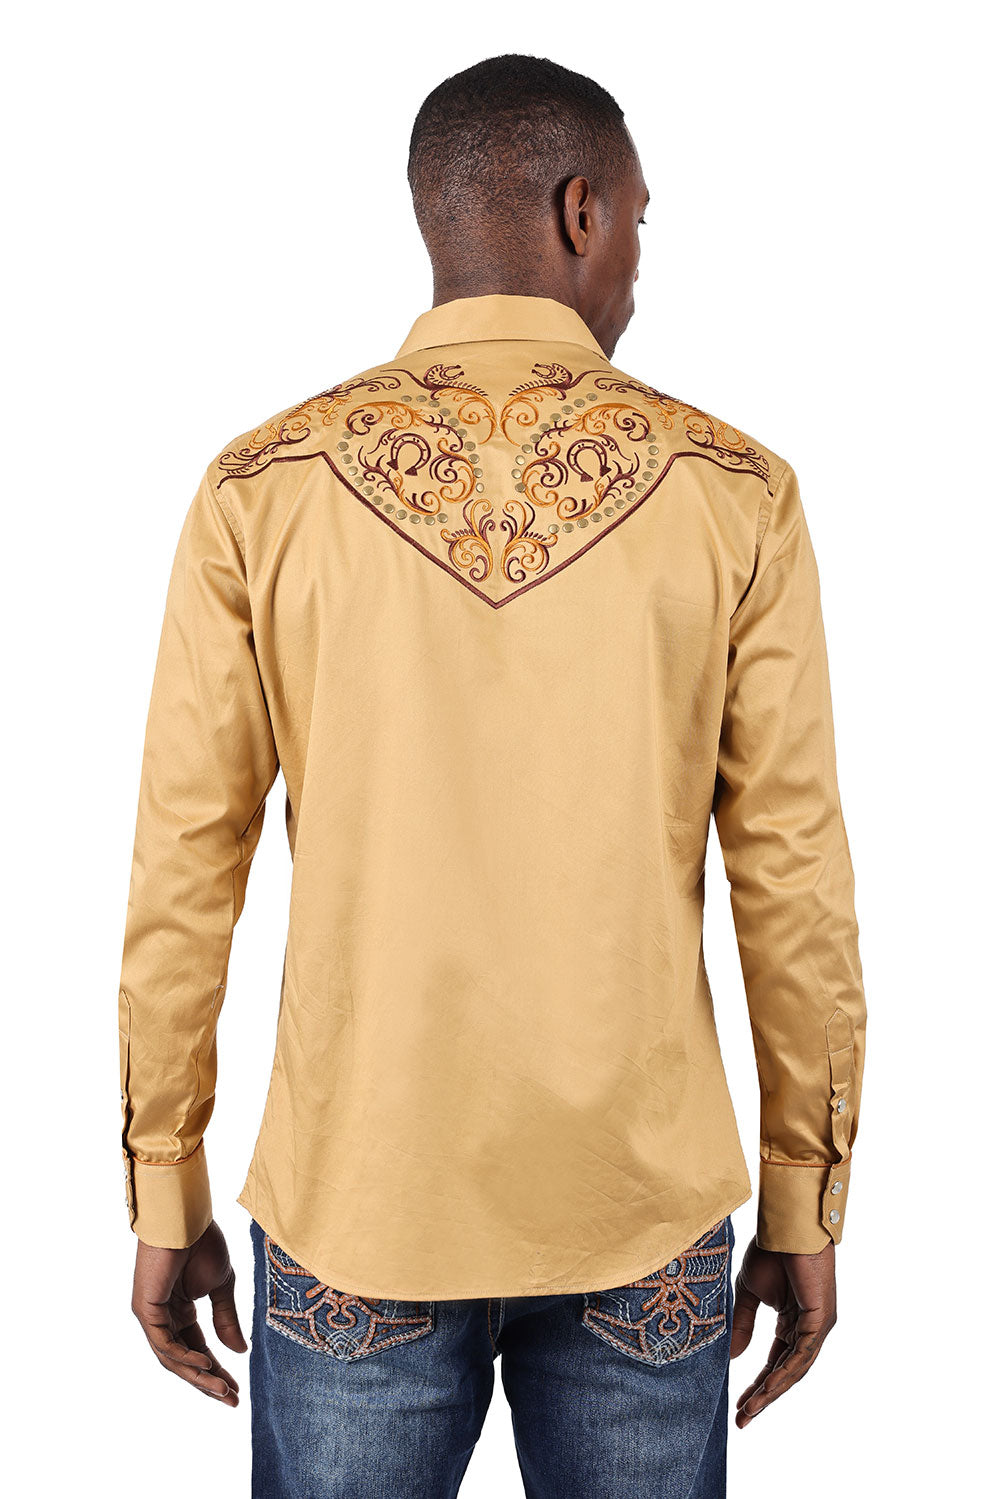 BARABAS Men's Floral Arrow Embroidery Long Sleeve Western Shirts 3WS7 Cream